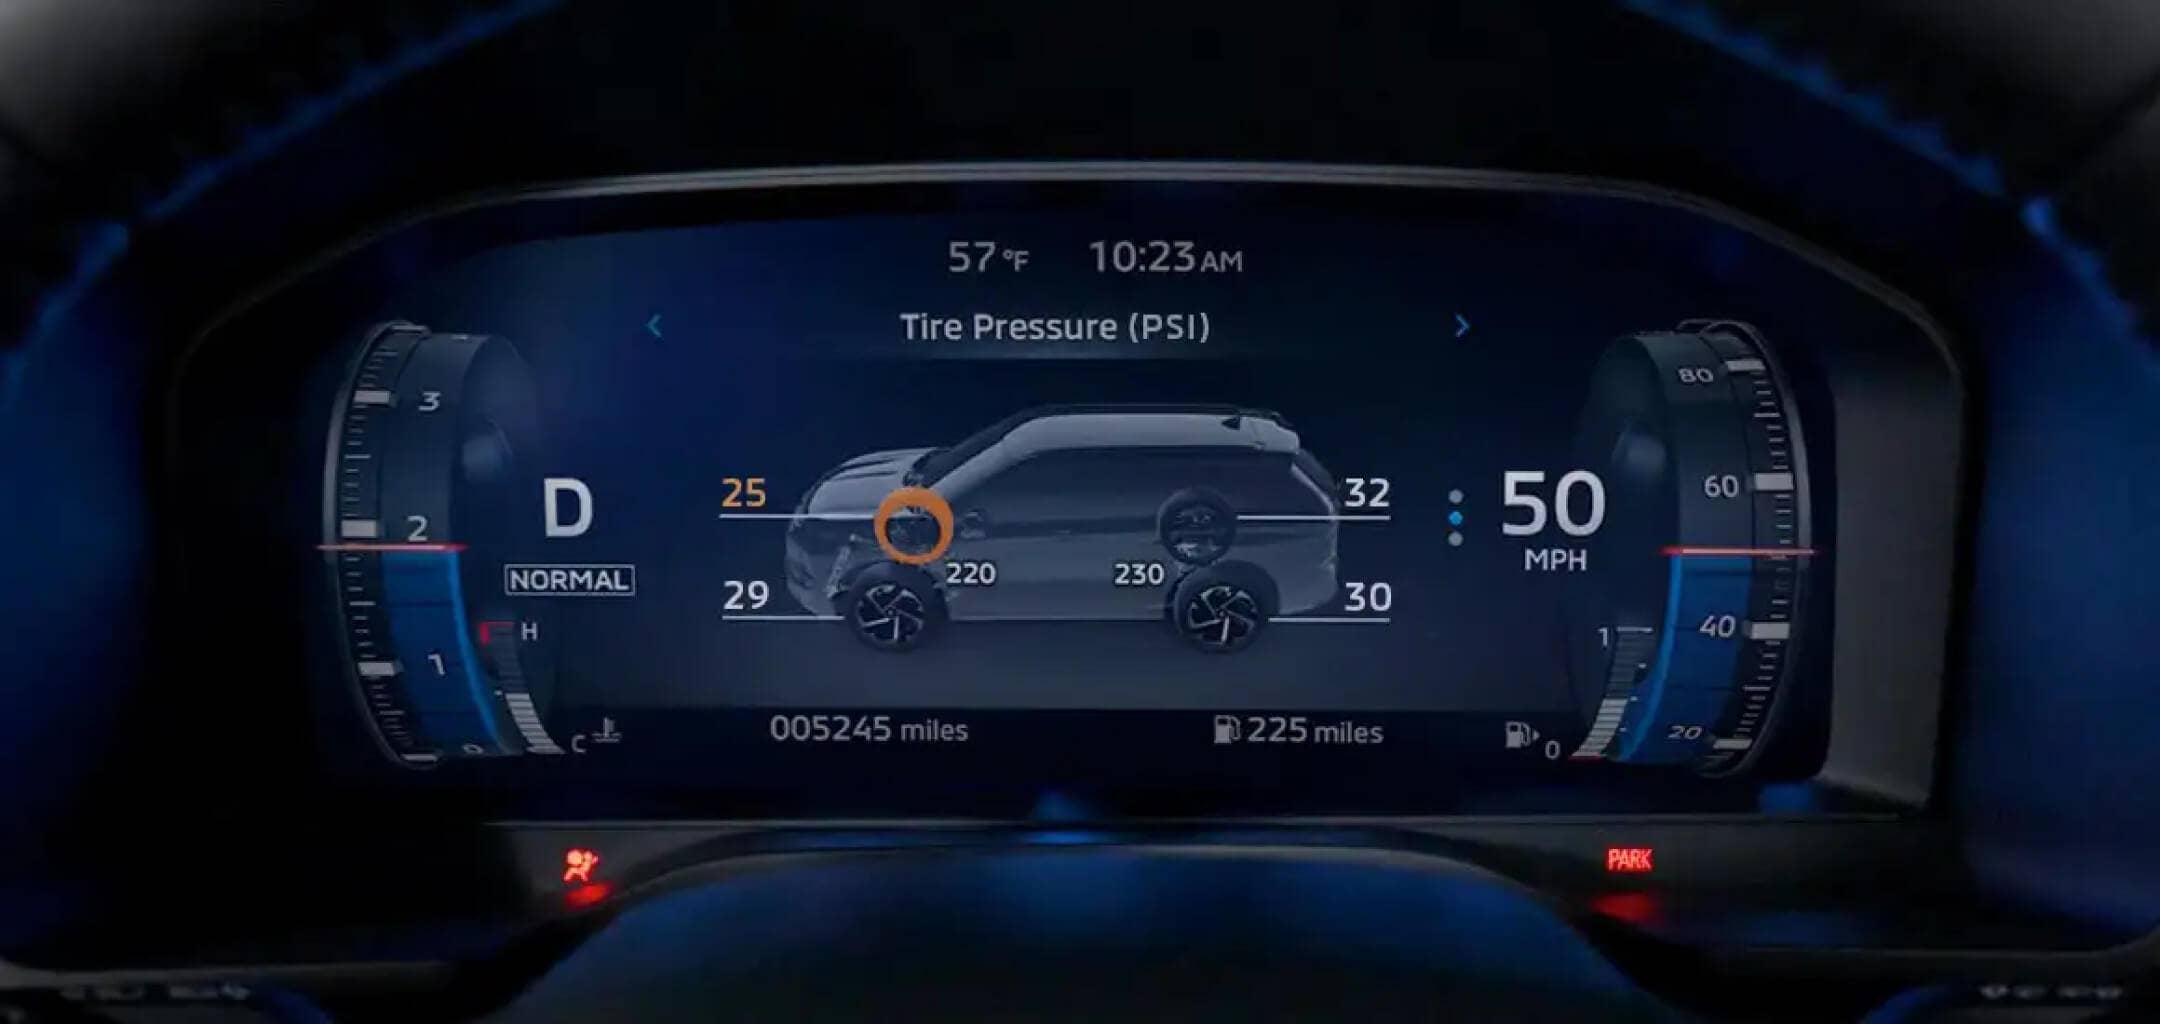 Tire pressure of all 4 wheels shown on the 2022 & 2023 Mitsubishi Outlander SUV dashboard.